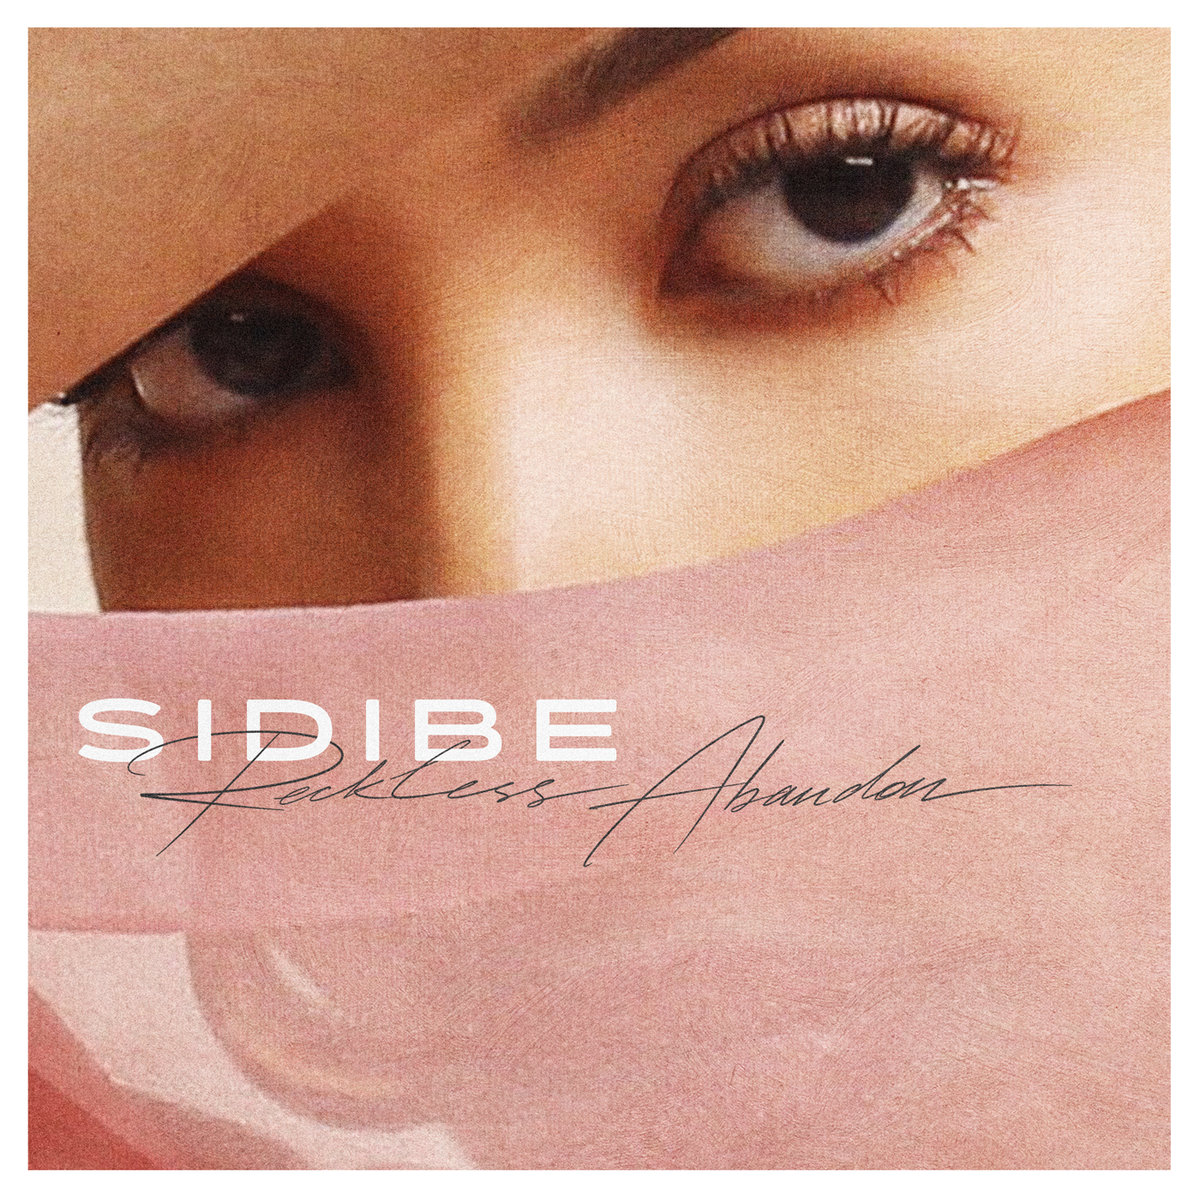 Sidibe - Reckless Abandon EP Stream